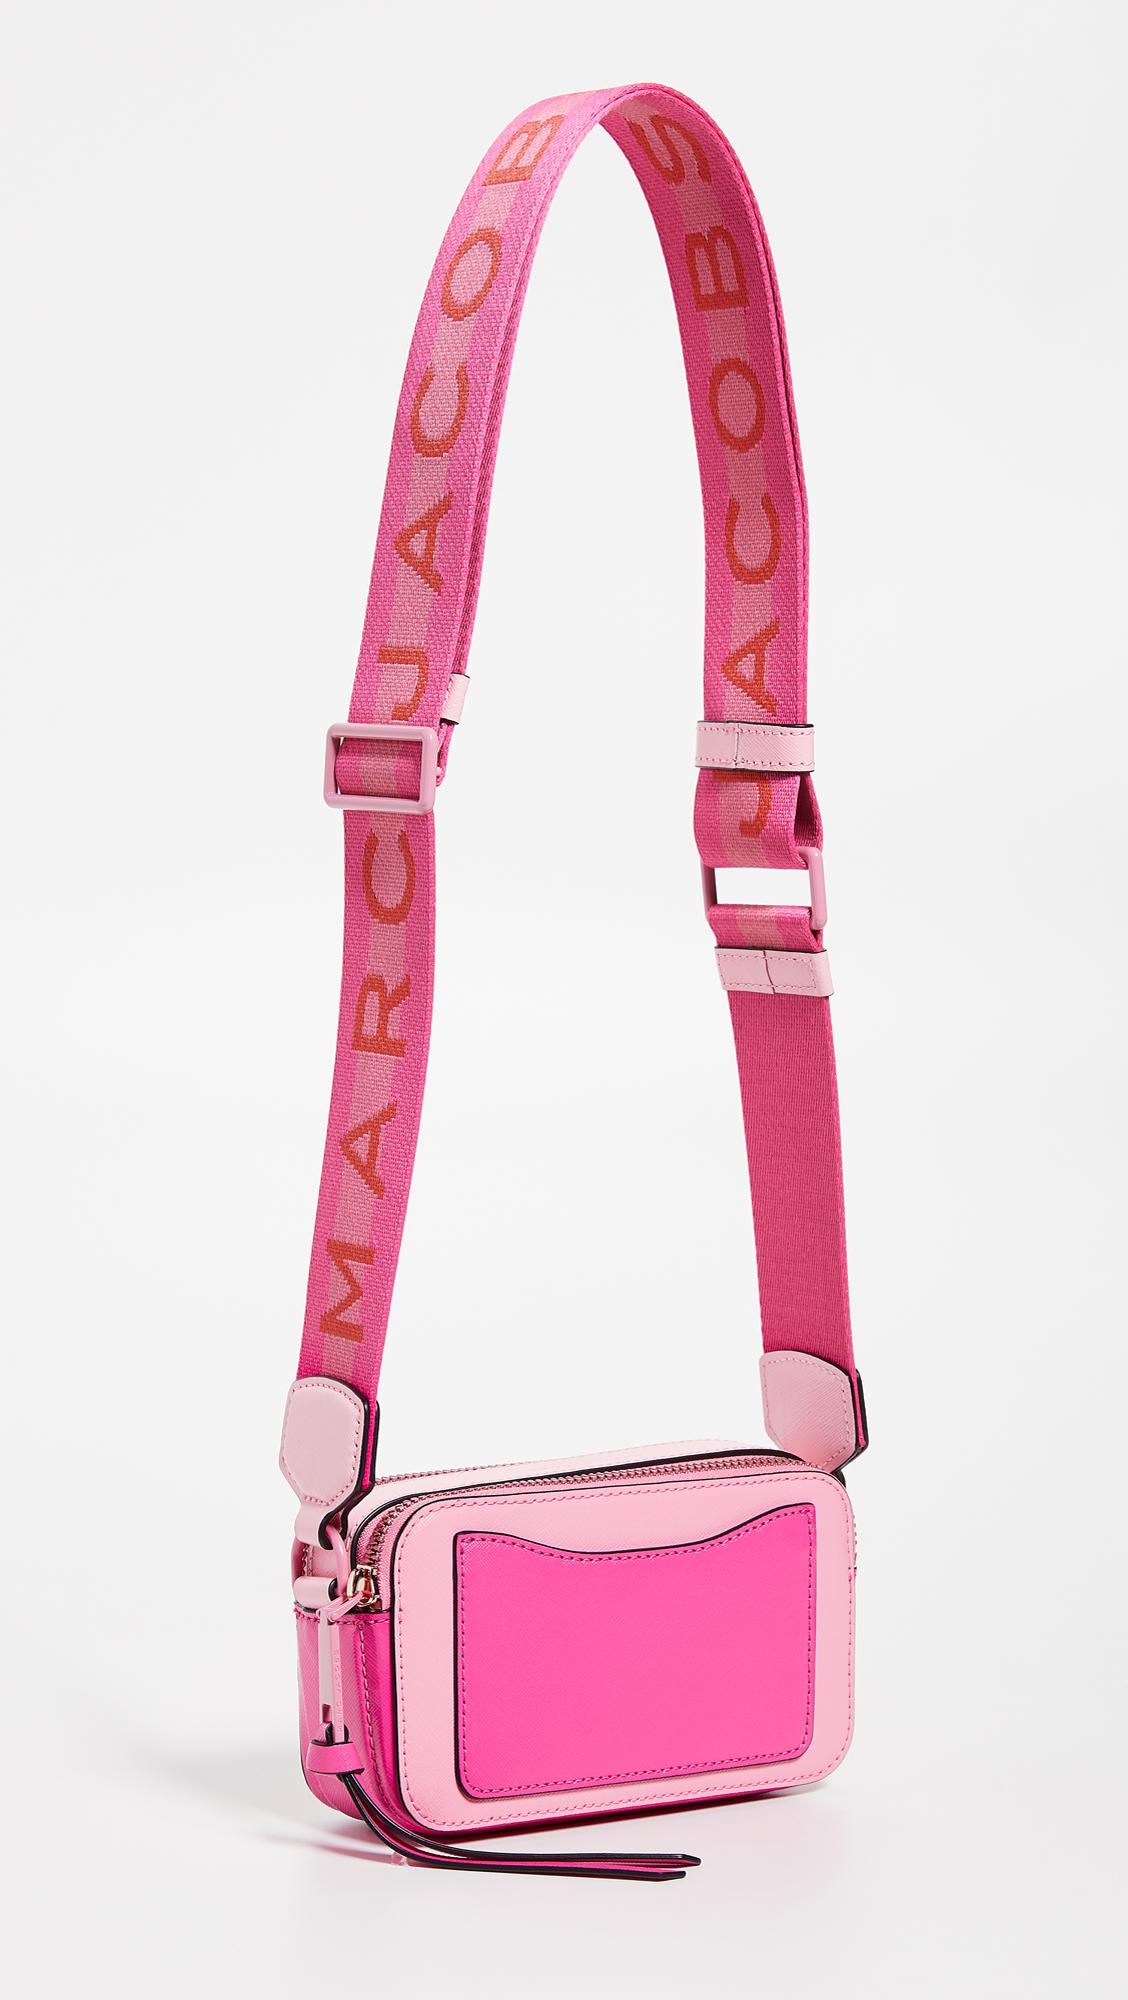 Cross body bags Marc Jacobs - Snapshot Small Camera pink cross body bag -  M0015373955